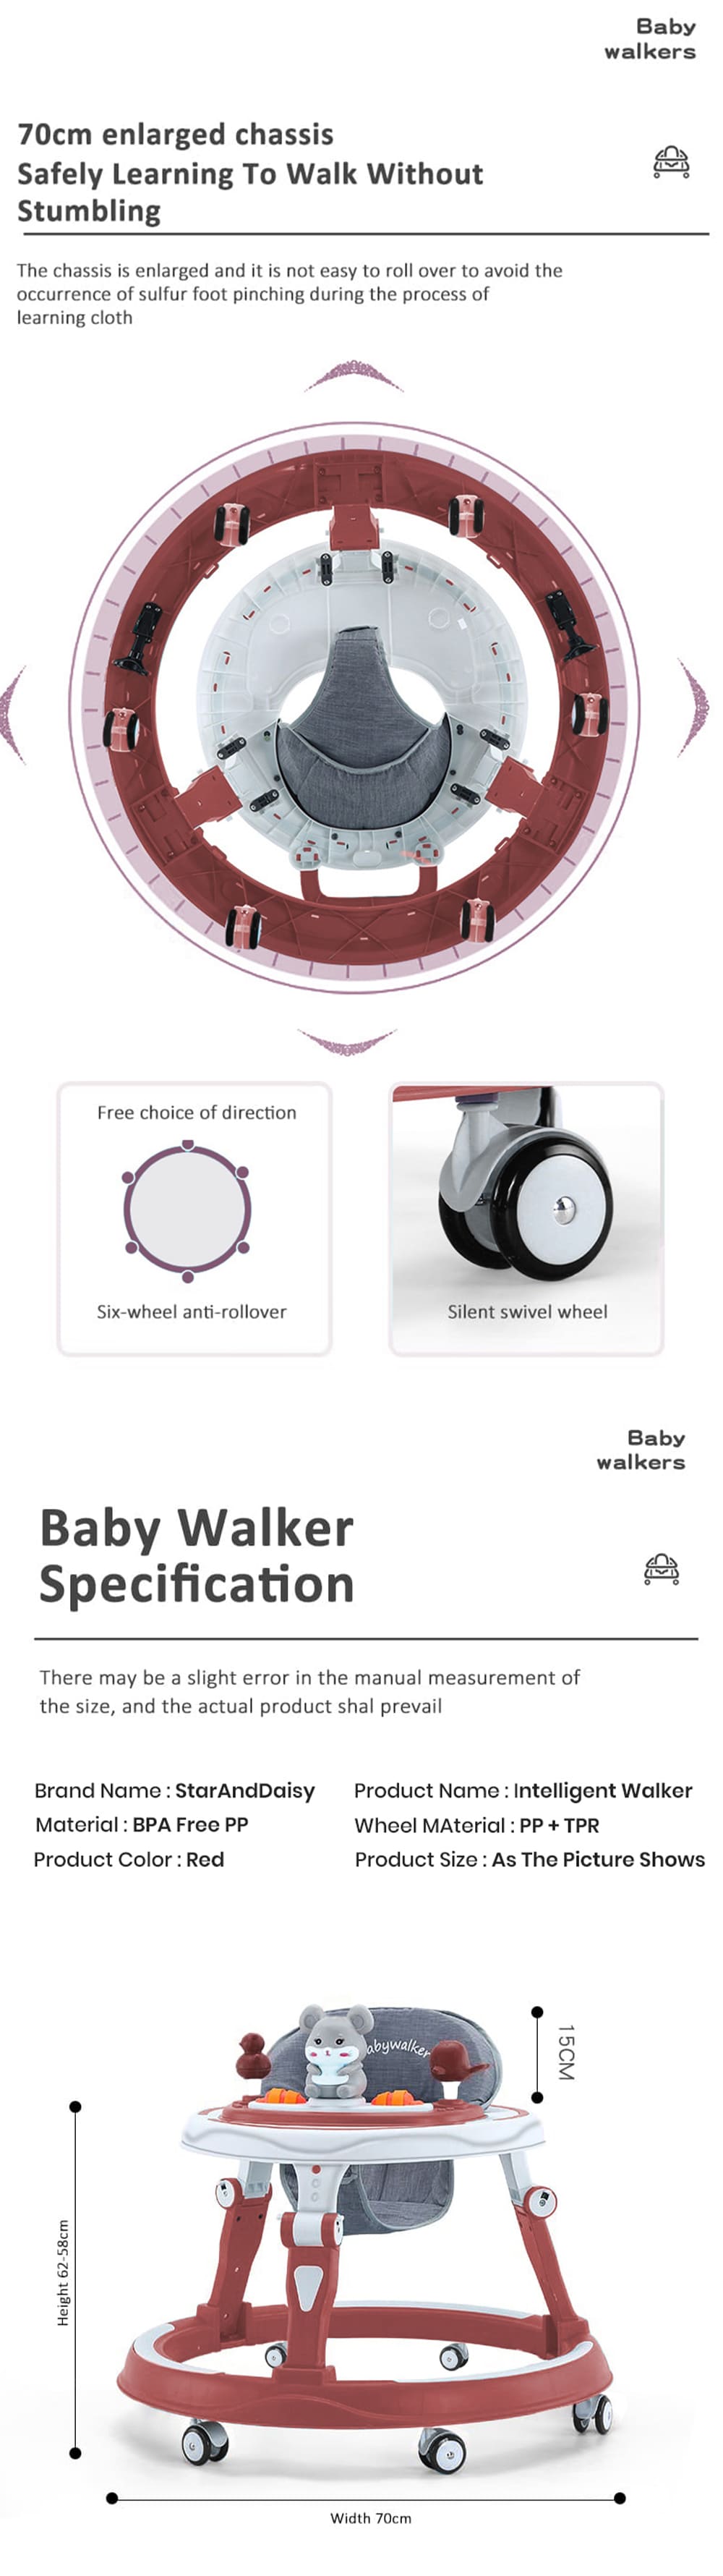 Specification of Intelligent Baby Walker